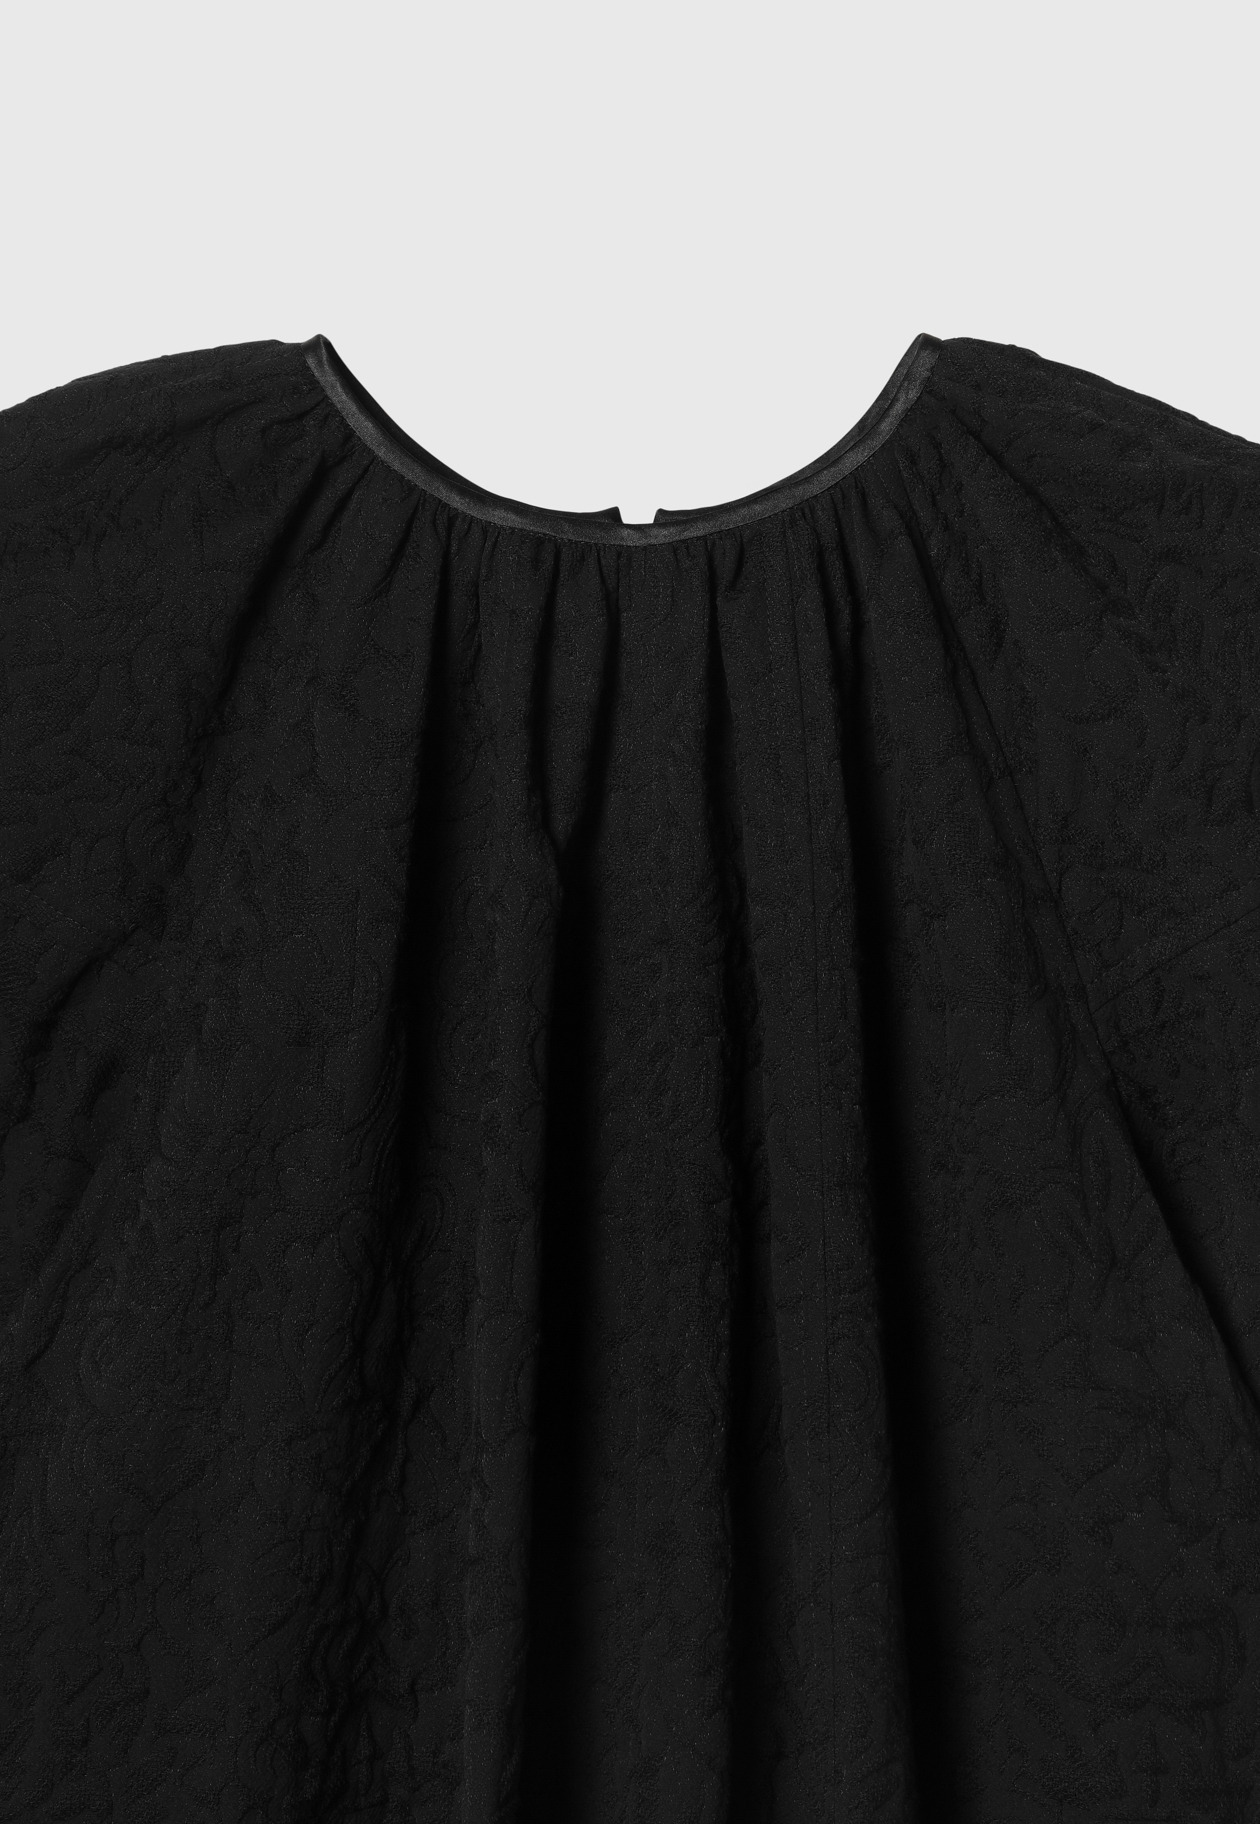 KARAMI JACQUARD DRESS 詳細画像 Black 9